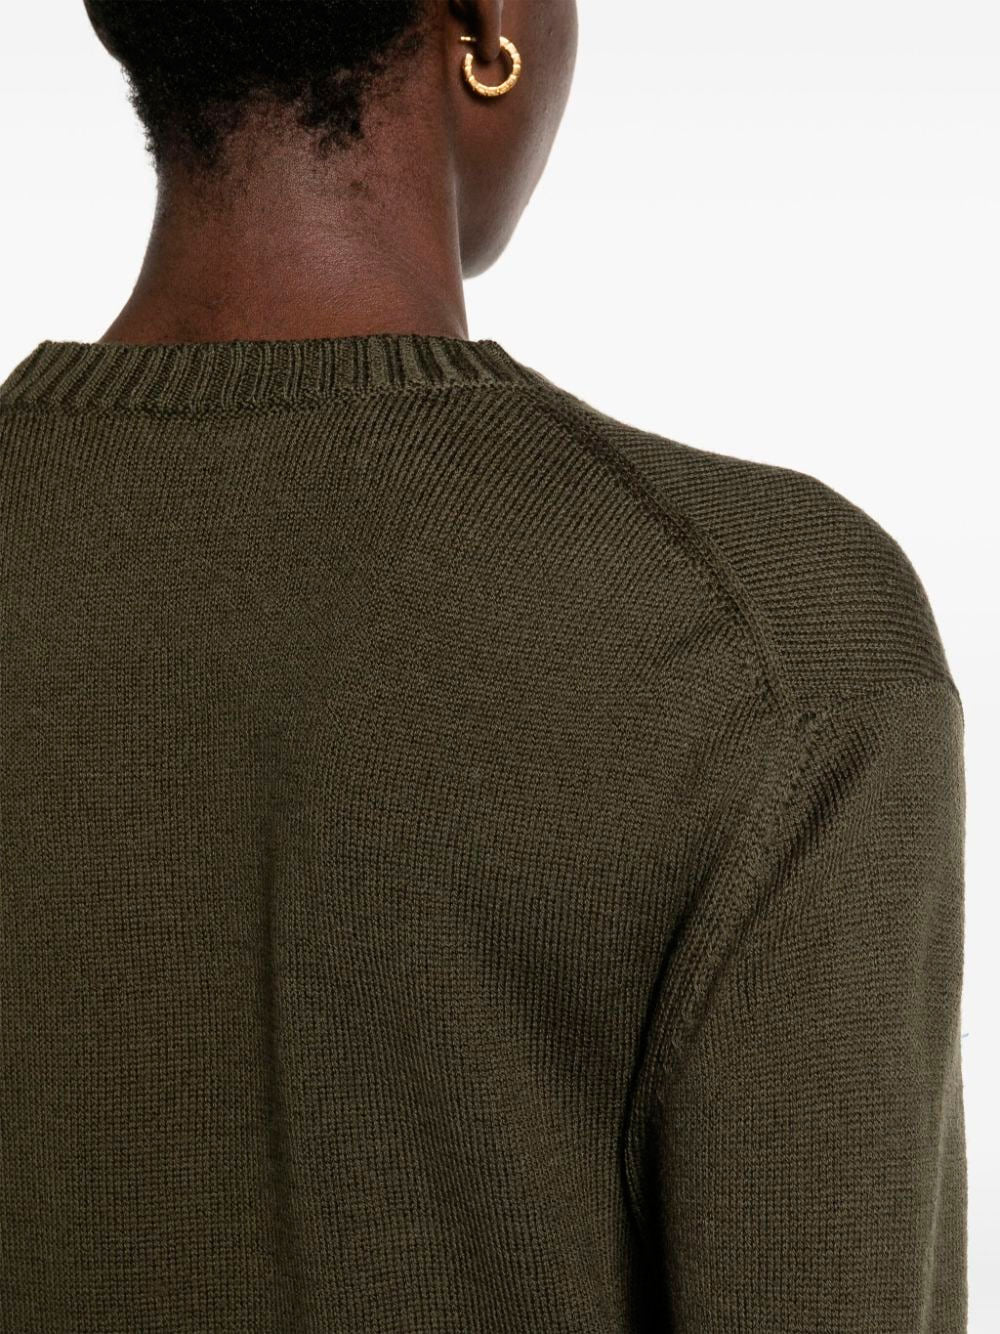 Jersey de lana con cuello redondo